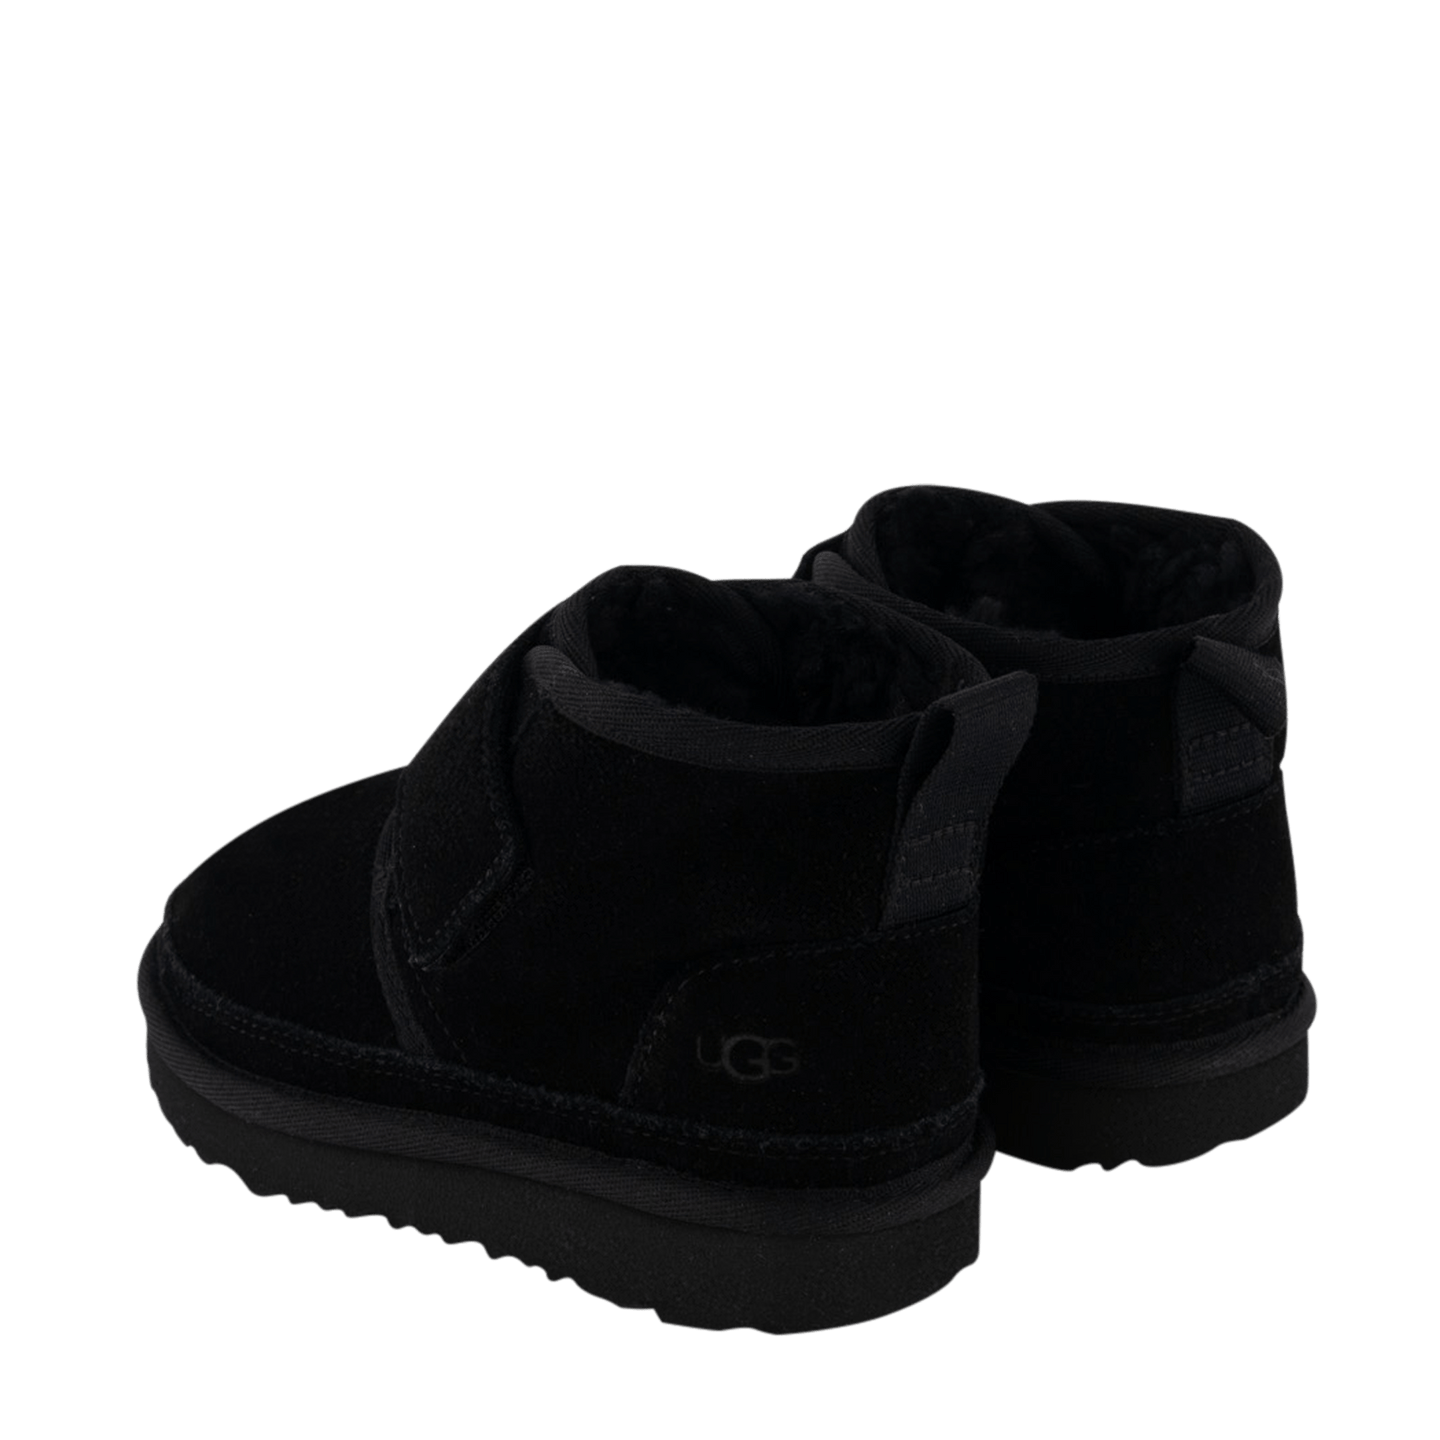 UGG Kinder Unisex Laarzen Zwart 22